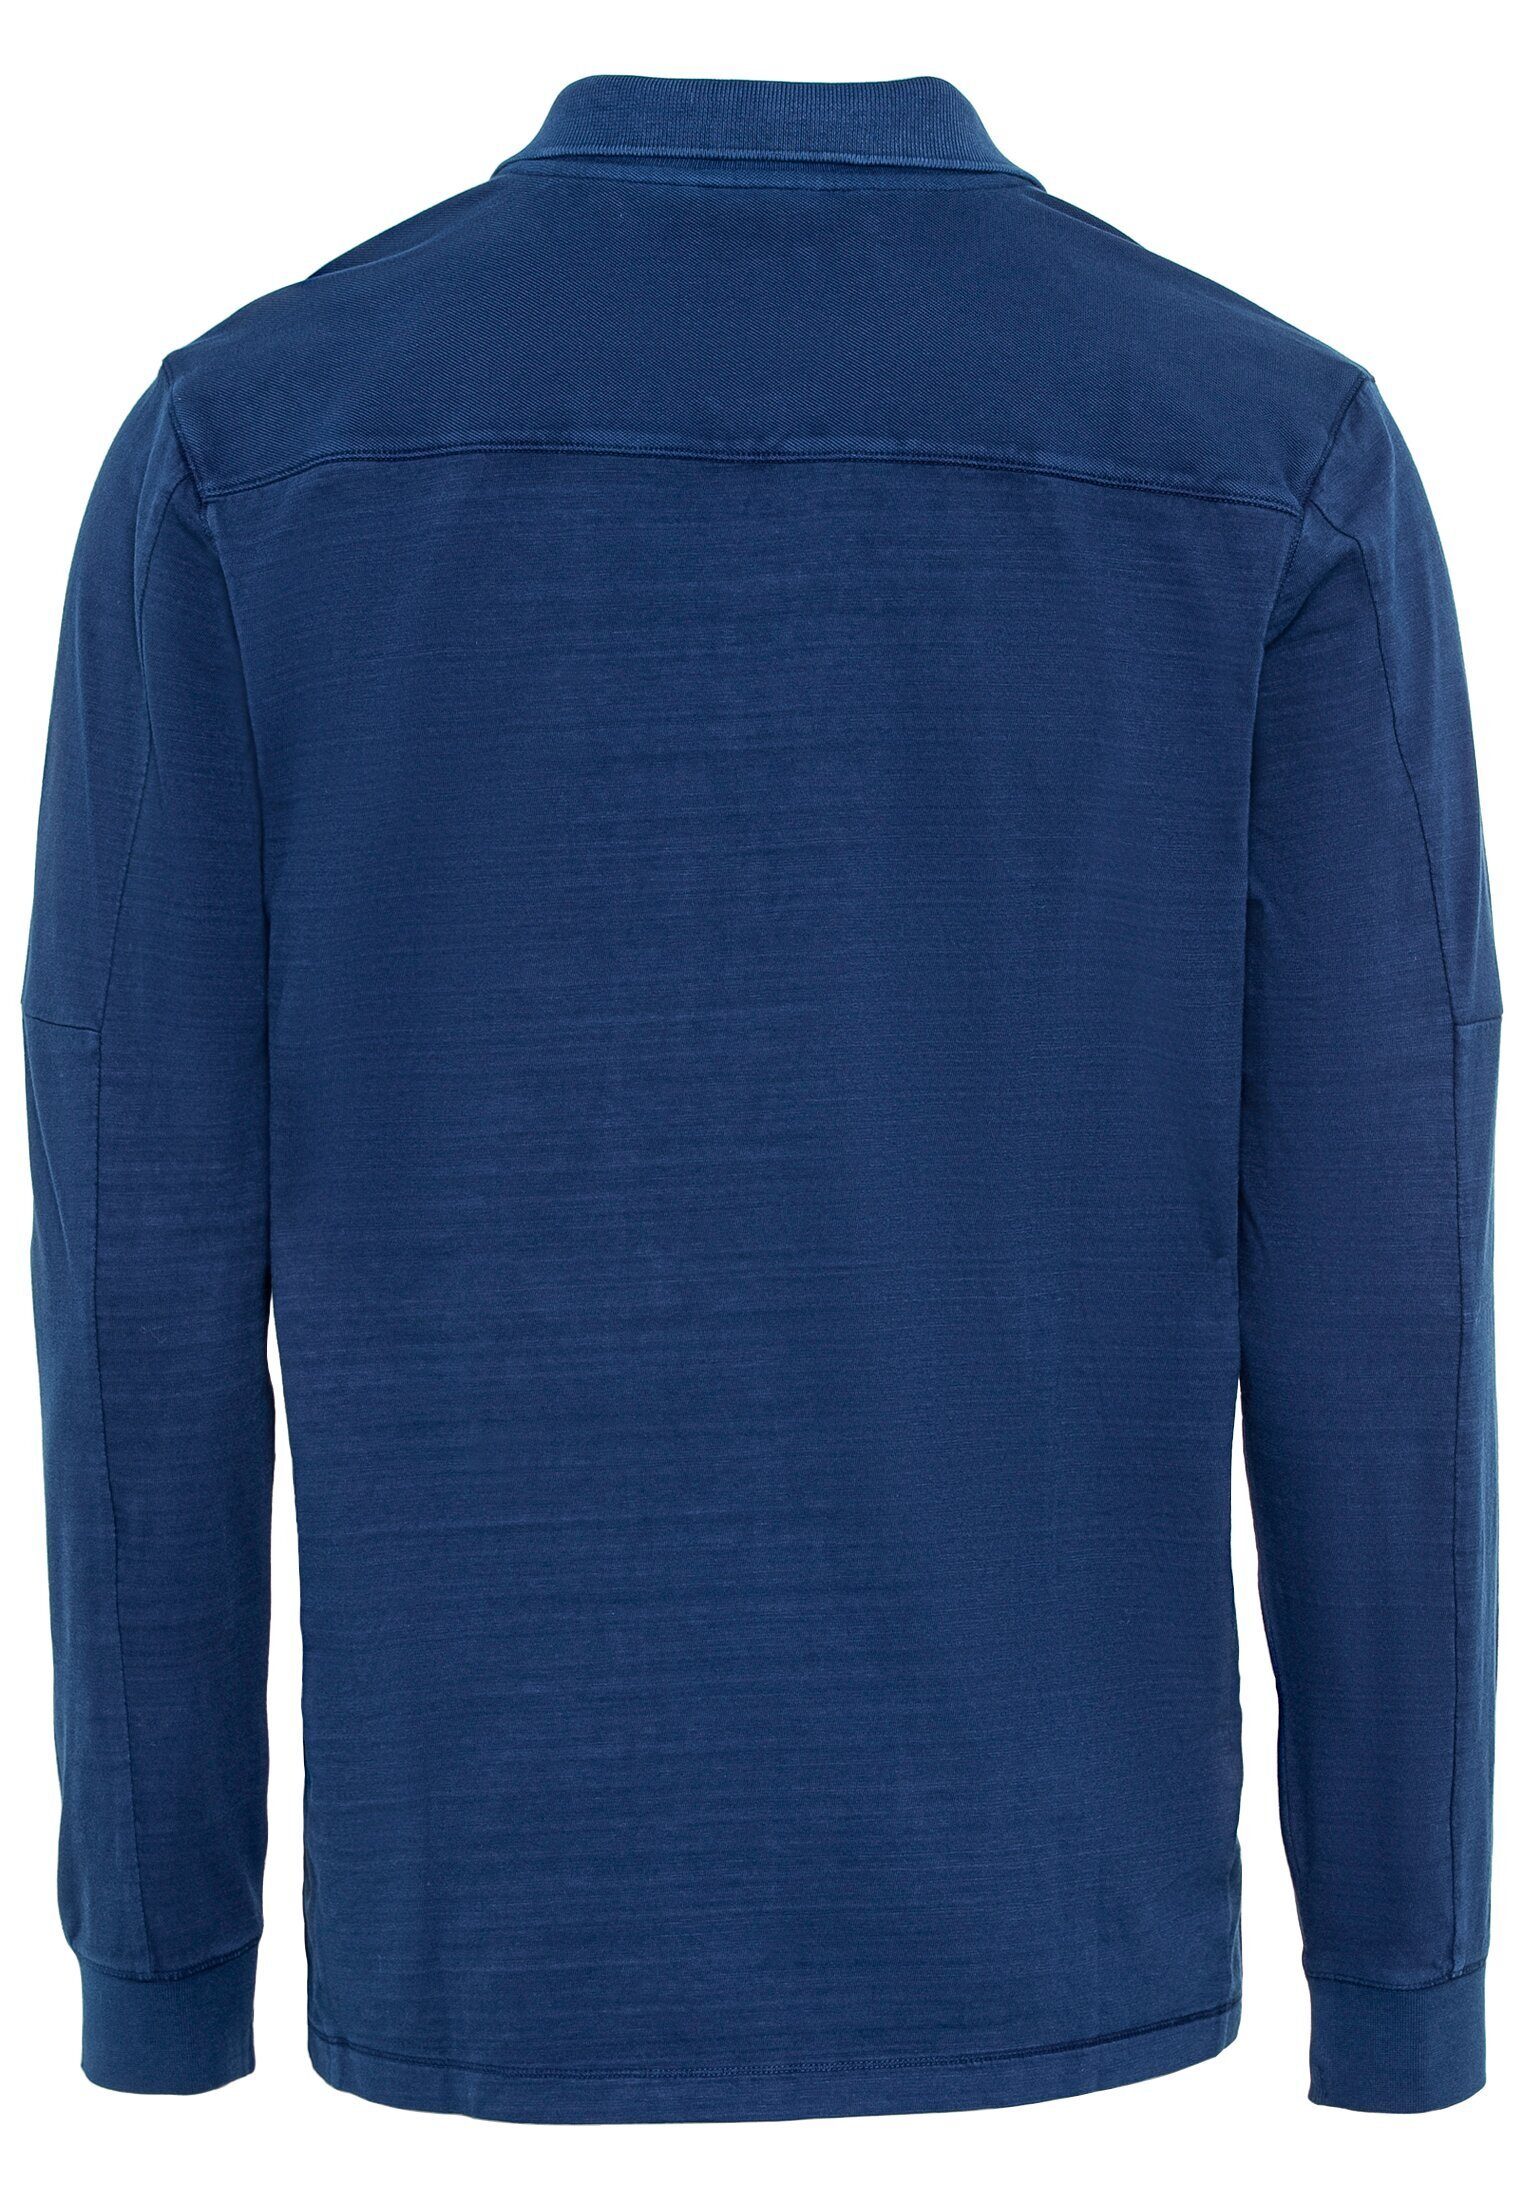 camel active Poloshirt Shirts_Langarm-Poloshirt Baumwolle Blau aus reiner